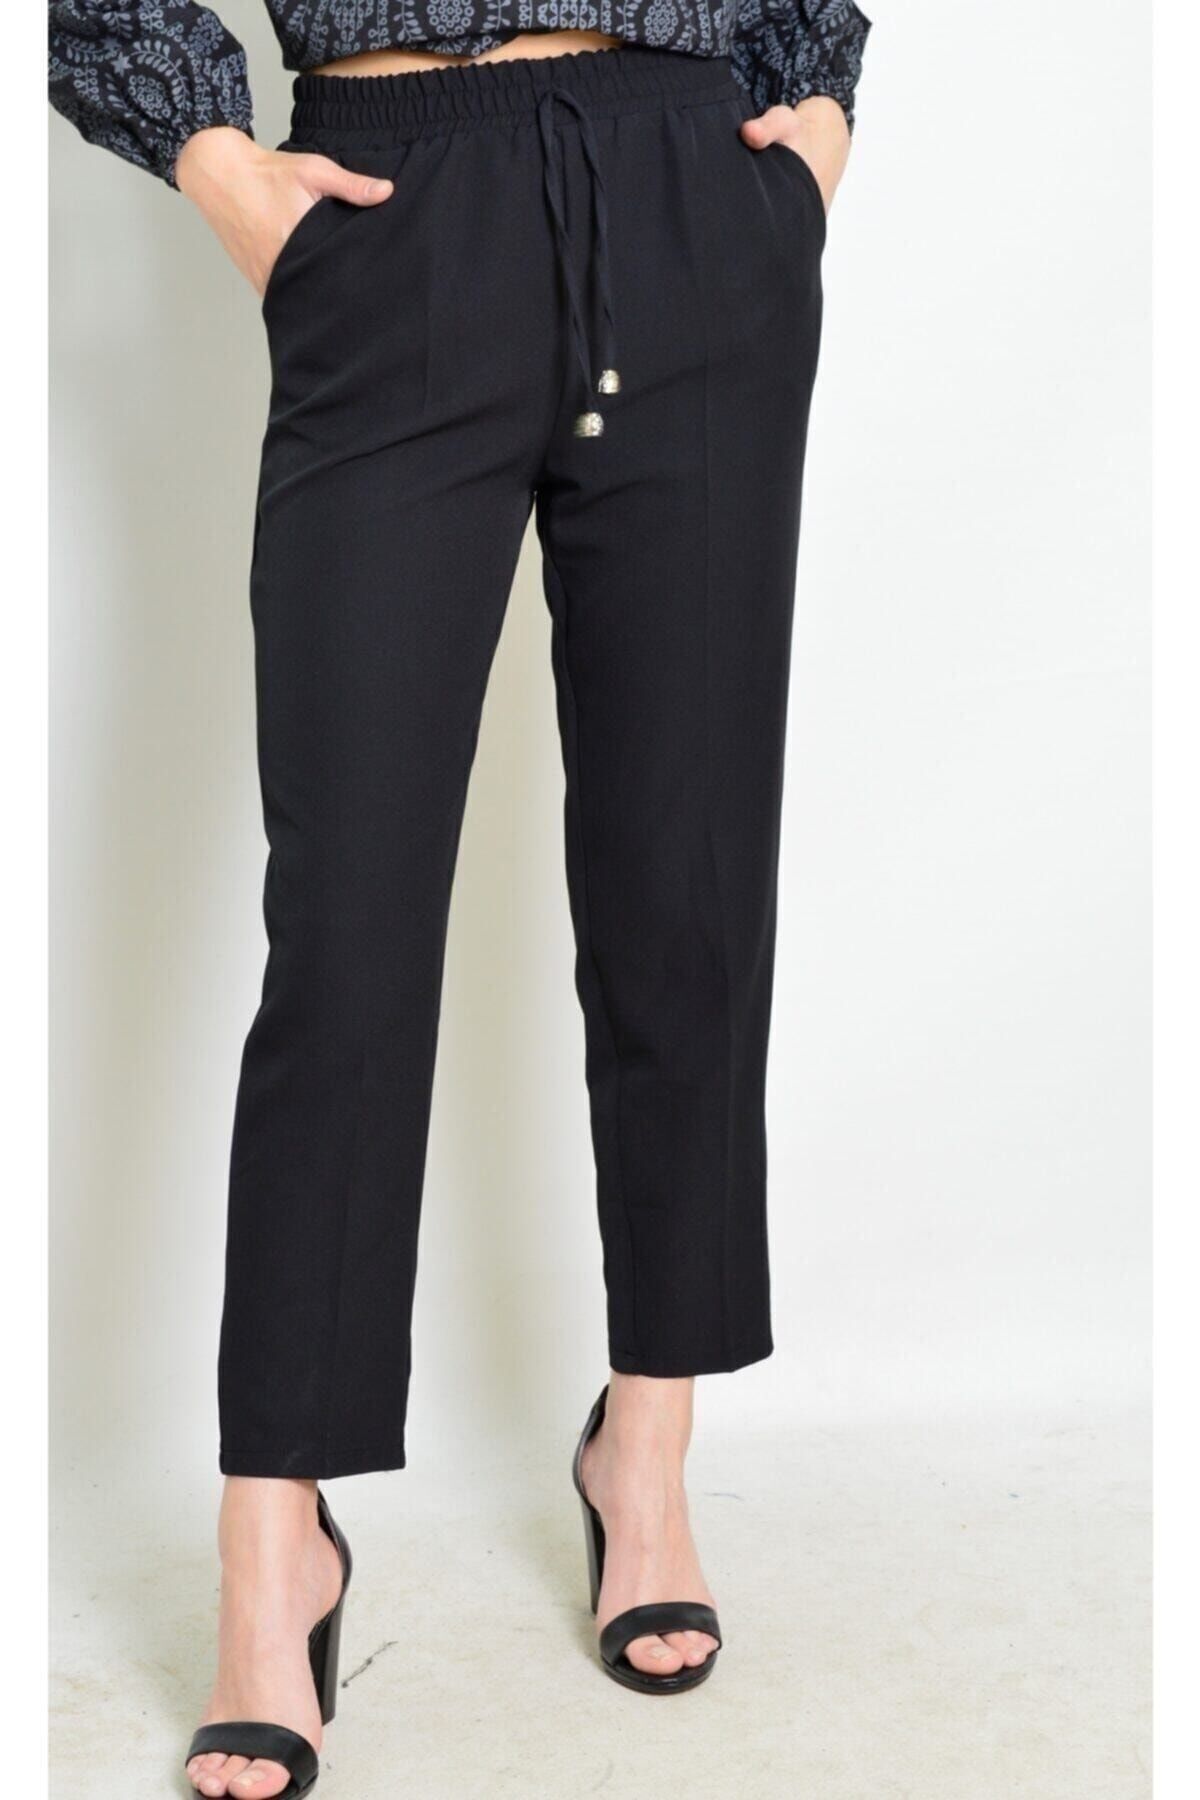 Moda Esinti Kadın Siyah Kumaş Bel Lastikli Havuç Pantolon